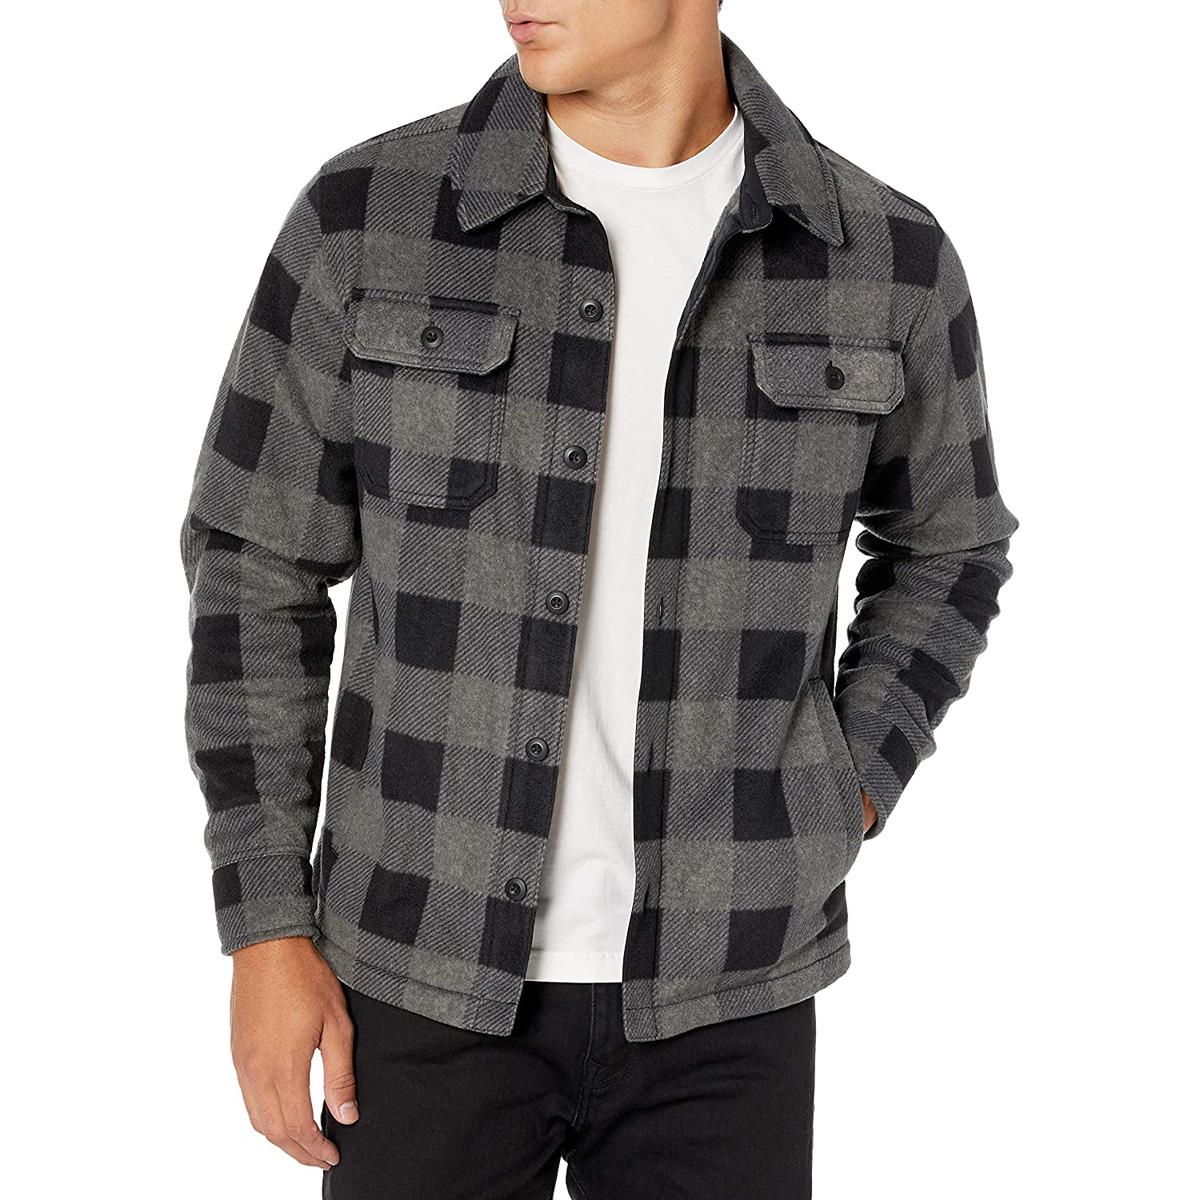 Amazon Essentials Long Sleeve Polar Fleece Shirt Jacket for $16.40